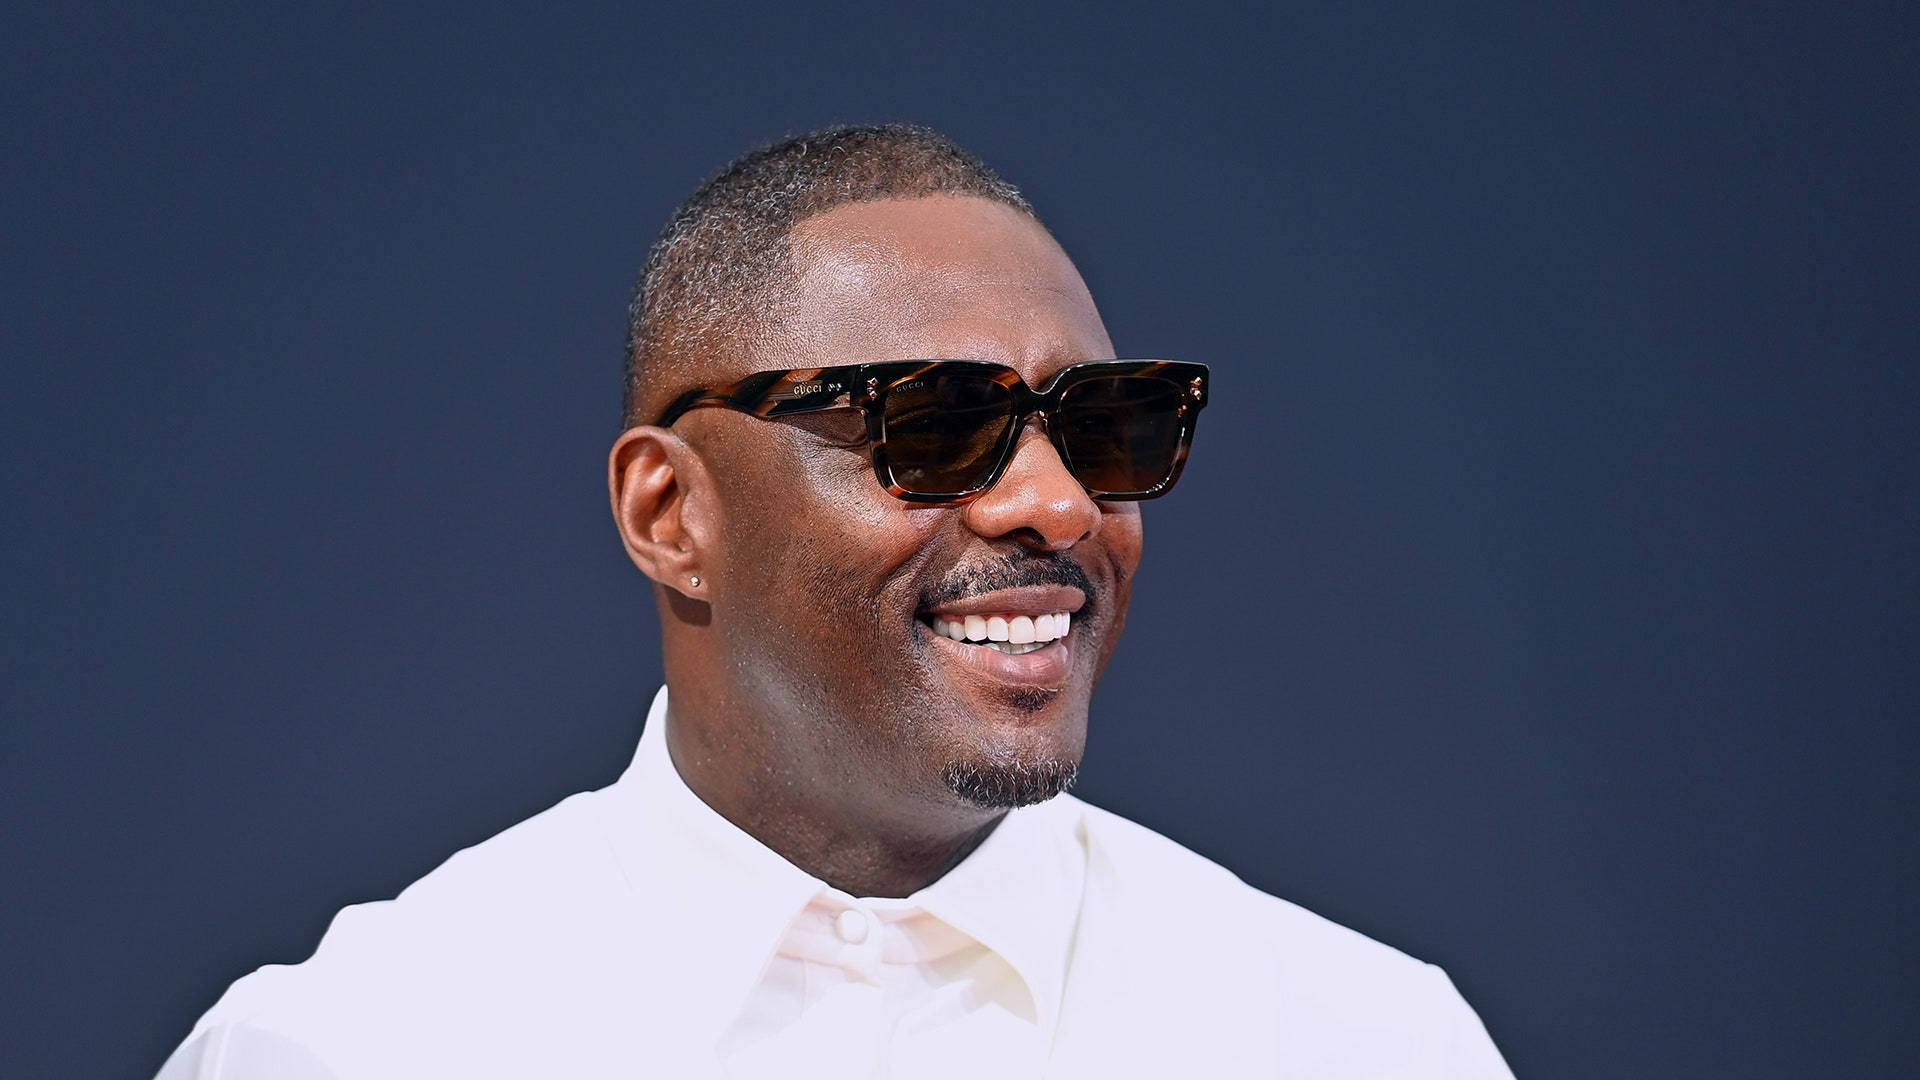 Idris Elba With Sunglasses